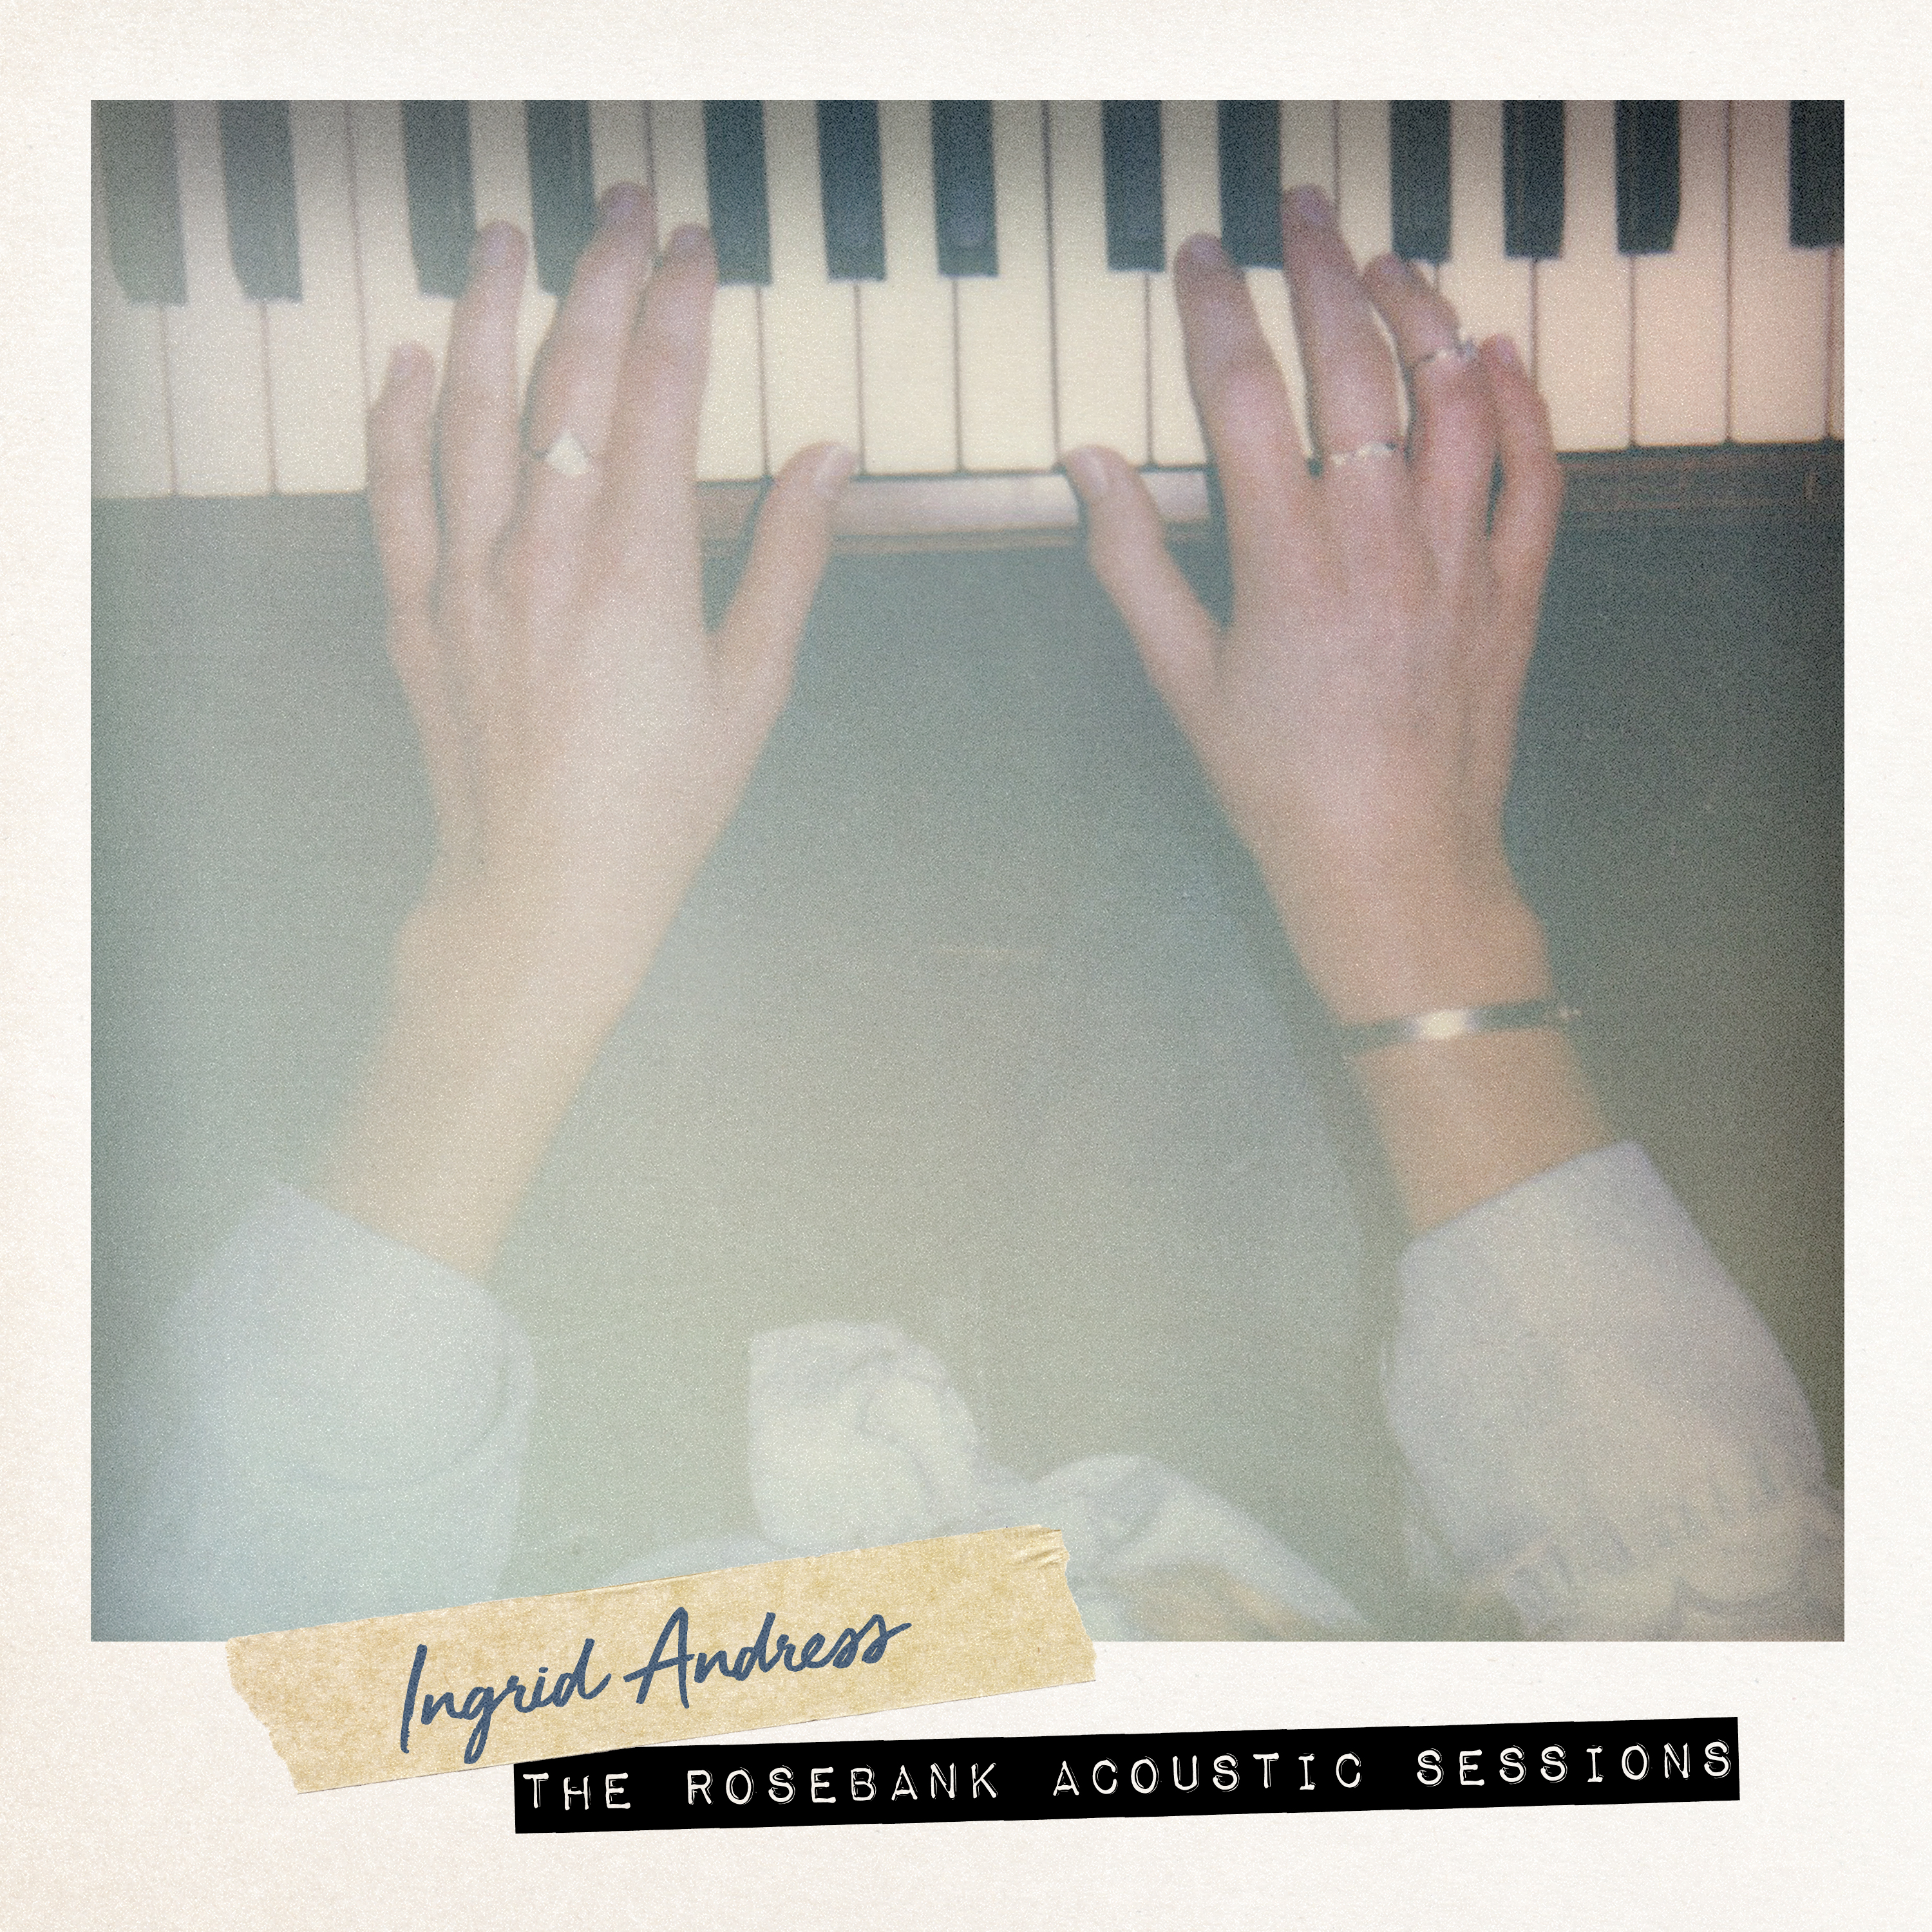 Ingrid Andress - The Rosebank Acoustic Sessions